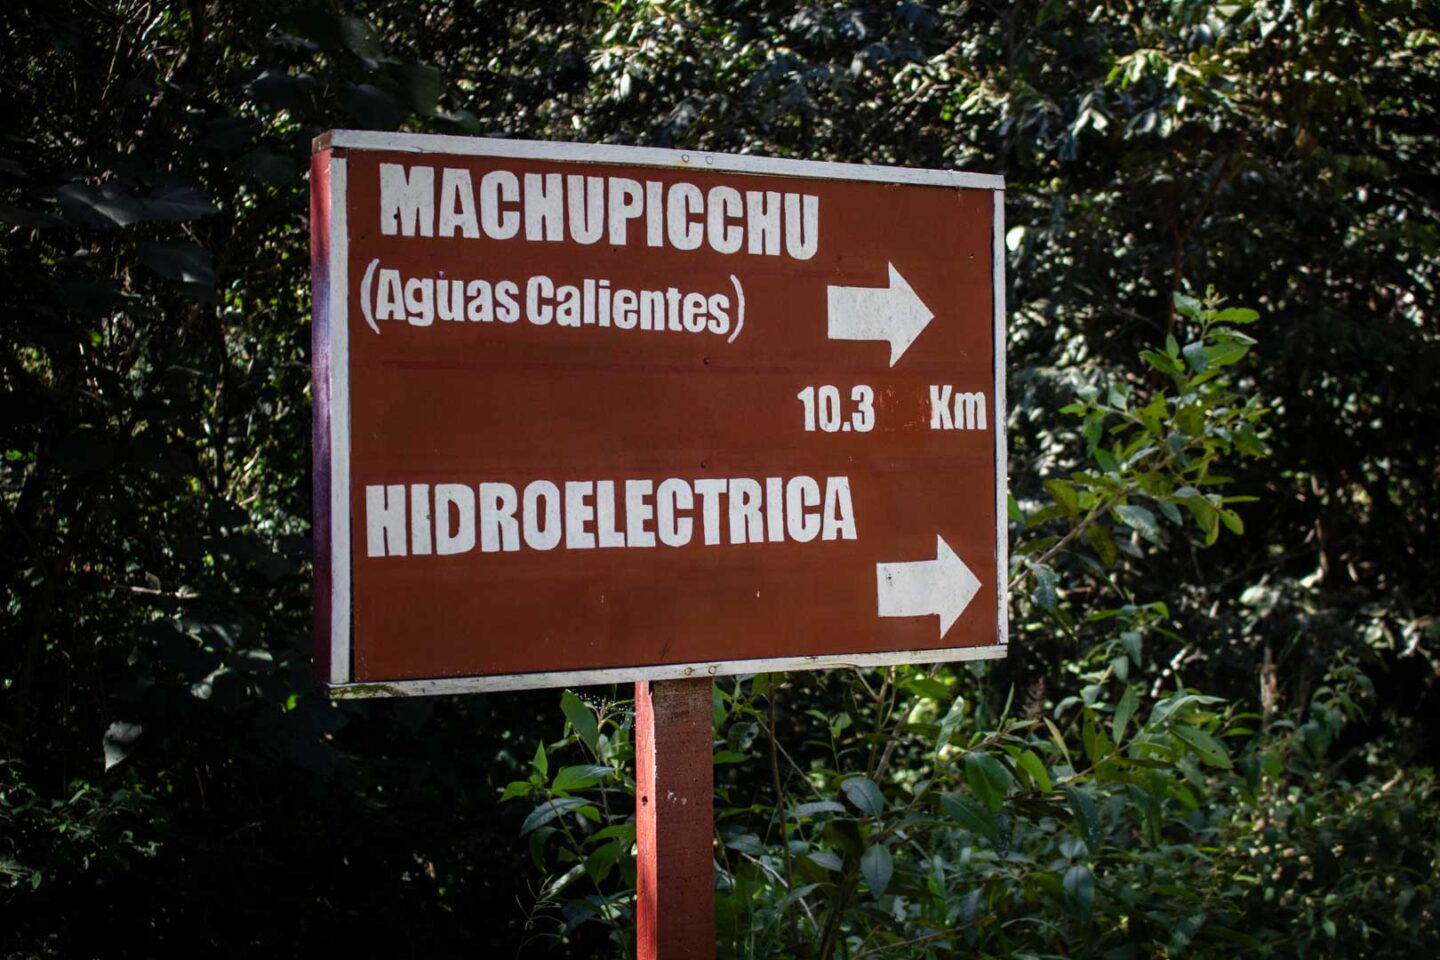 The Hidroelectrica walk to Aguas Calientes